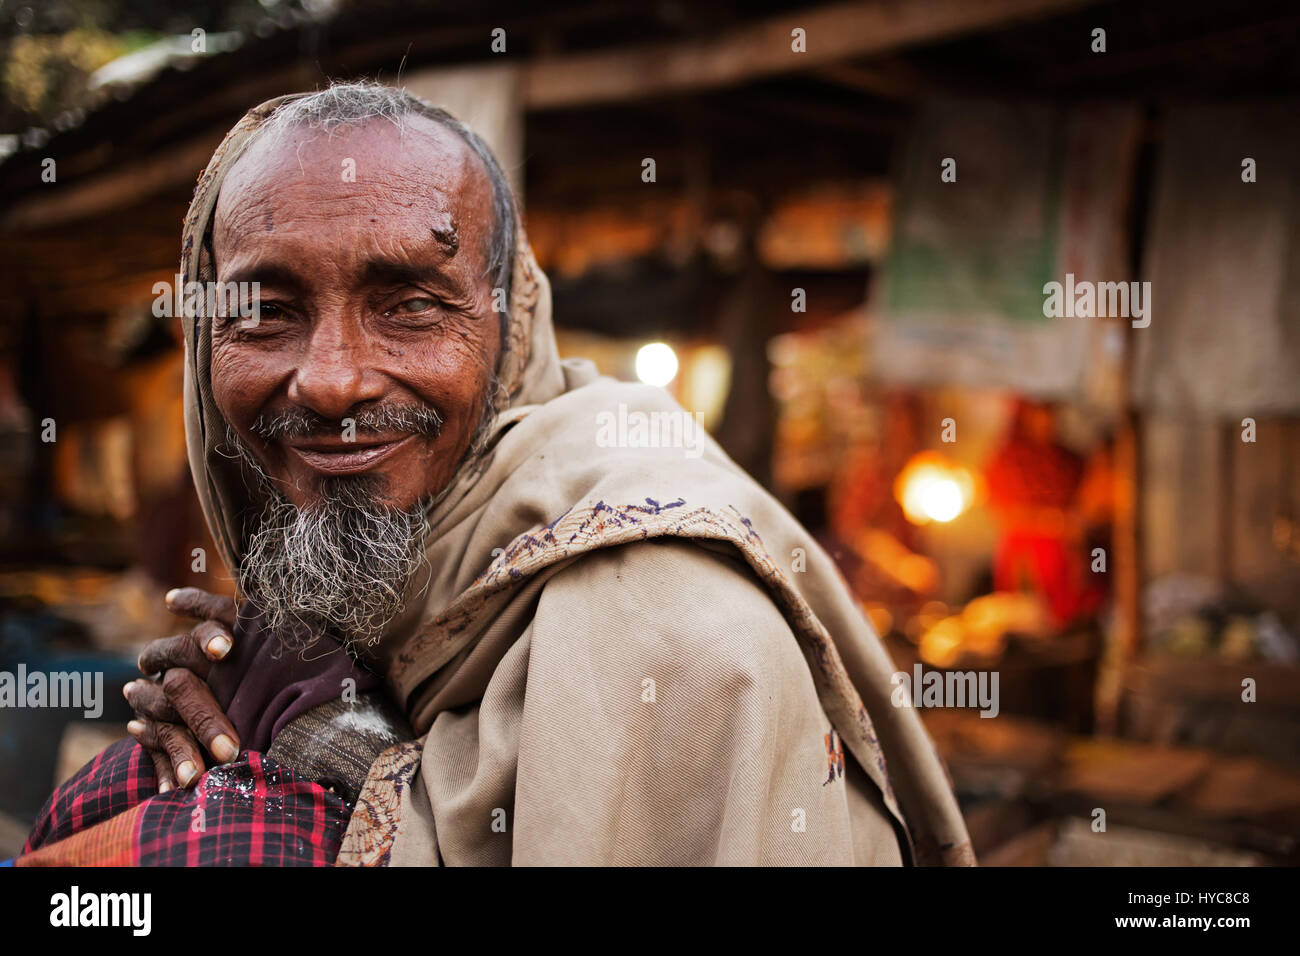 homeless man, dhaka, bangladesh Stock Photo